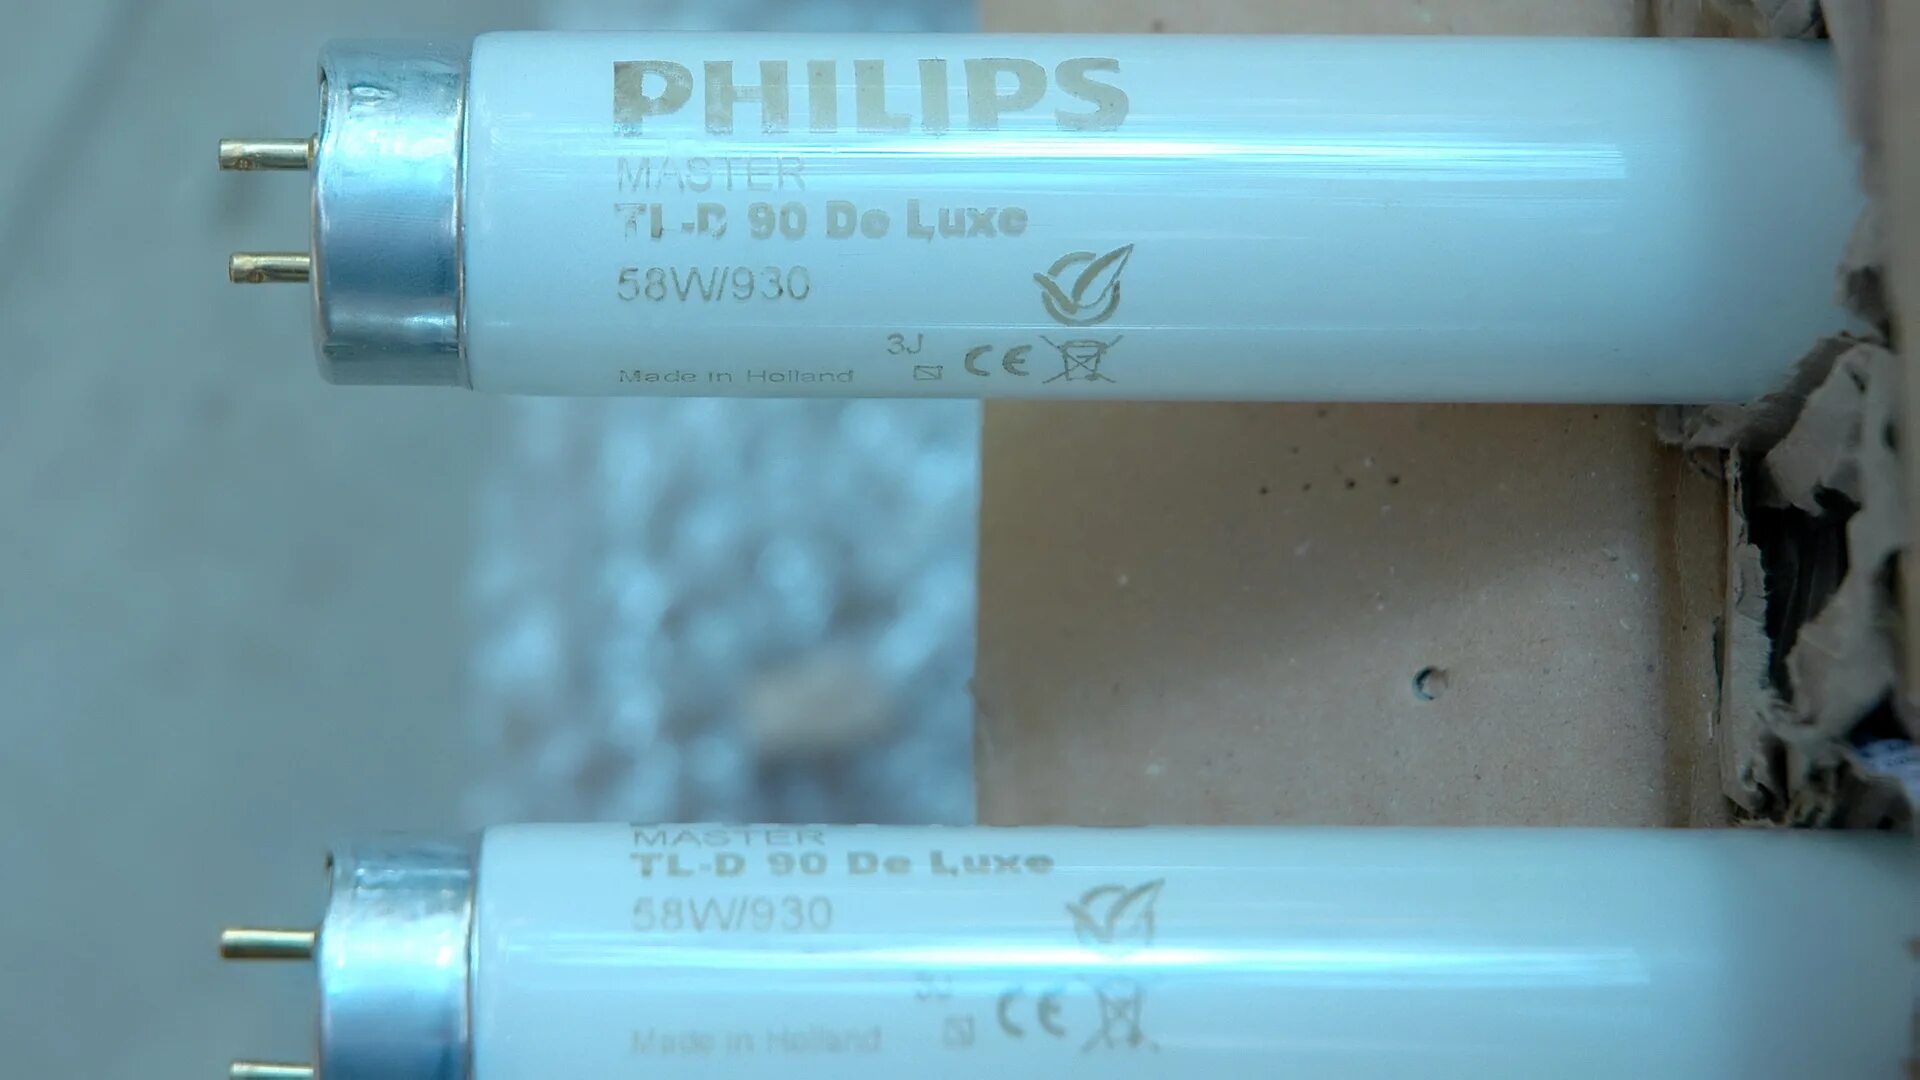 Tl 36w tl. Philips Master TL-D 90 de Luxe. Philips TL-D 90 18w/950 Graphica лампа люмин имп. Philips Master TL-D 18w/830 2k. Лампа Philips TL-D colored 18вт 1sl/25.